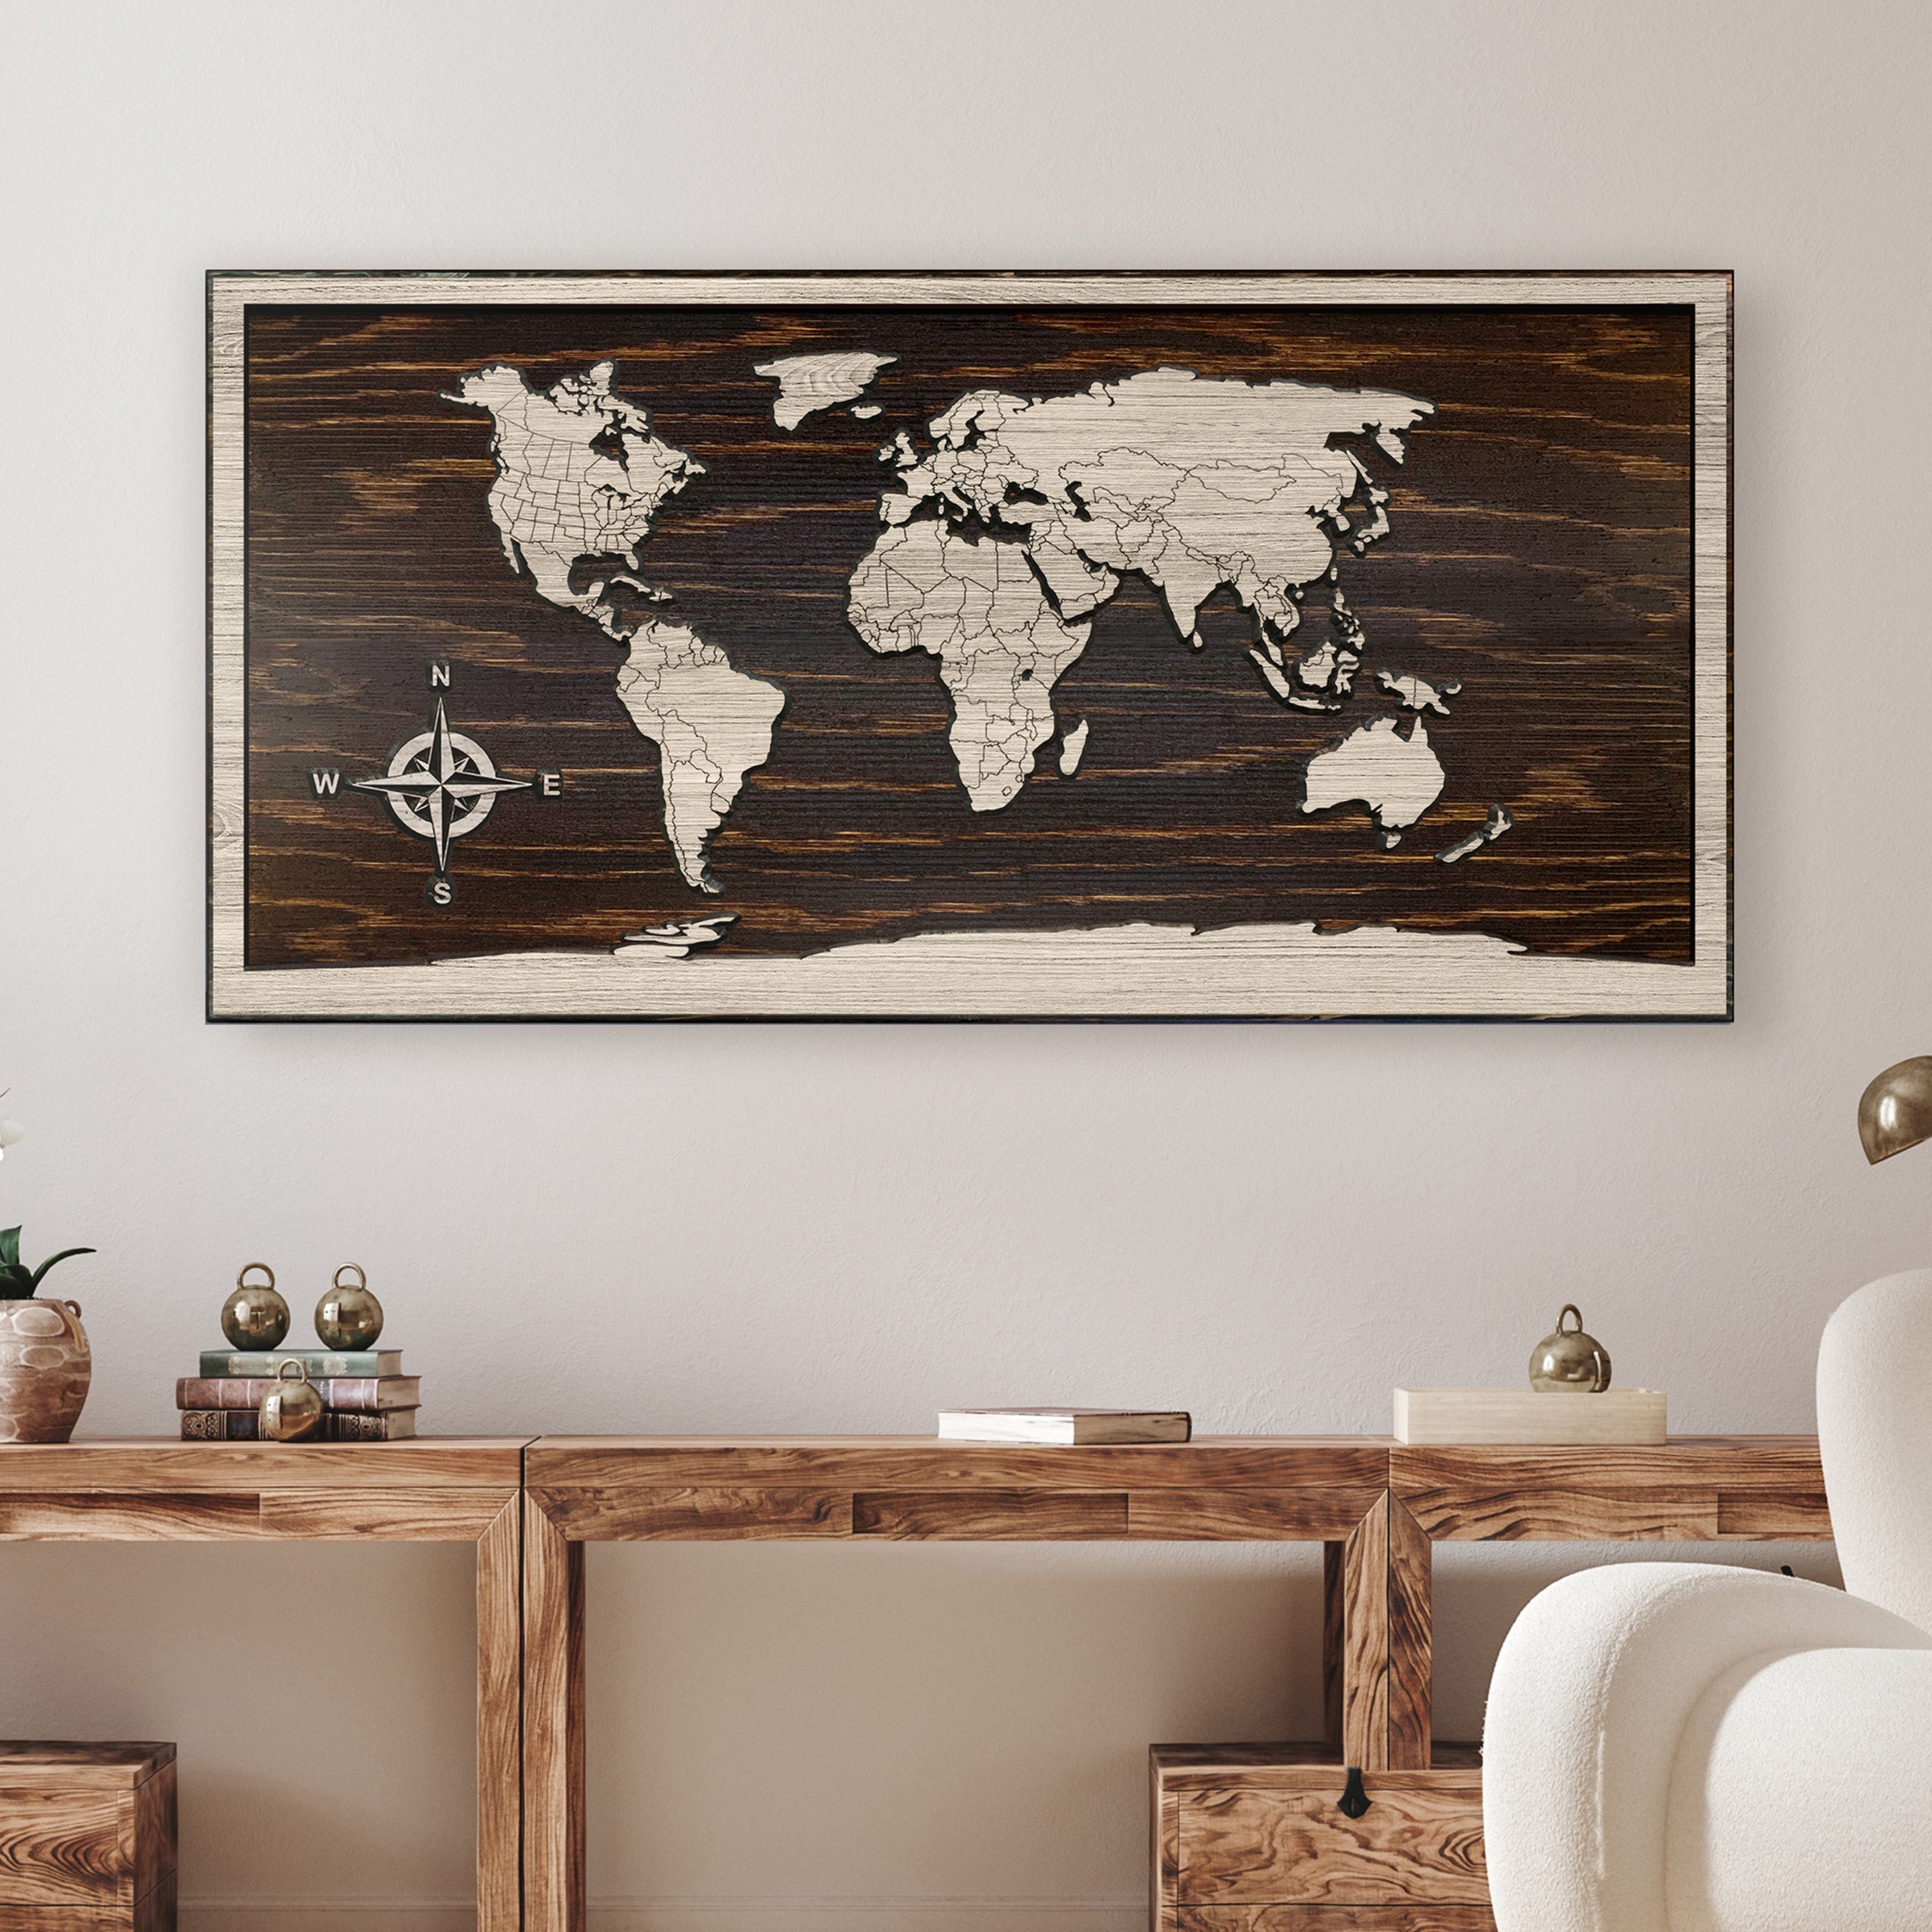 World Map Wall Art - No Text